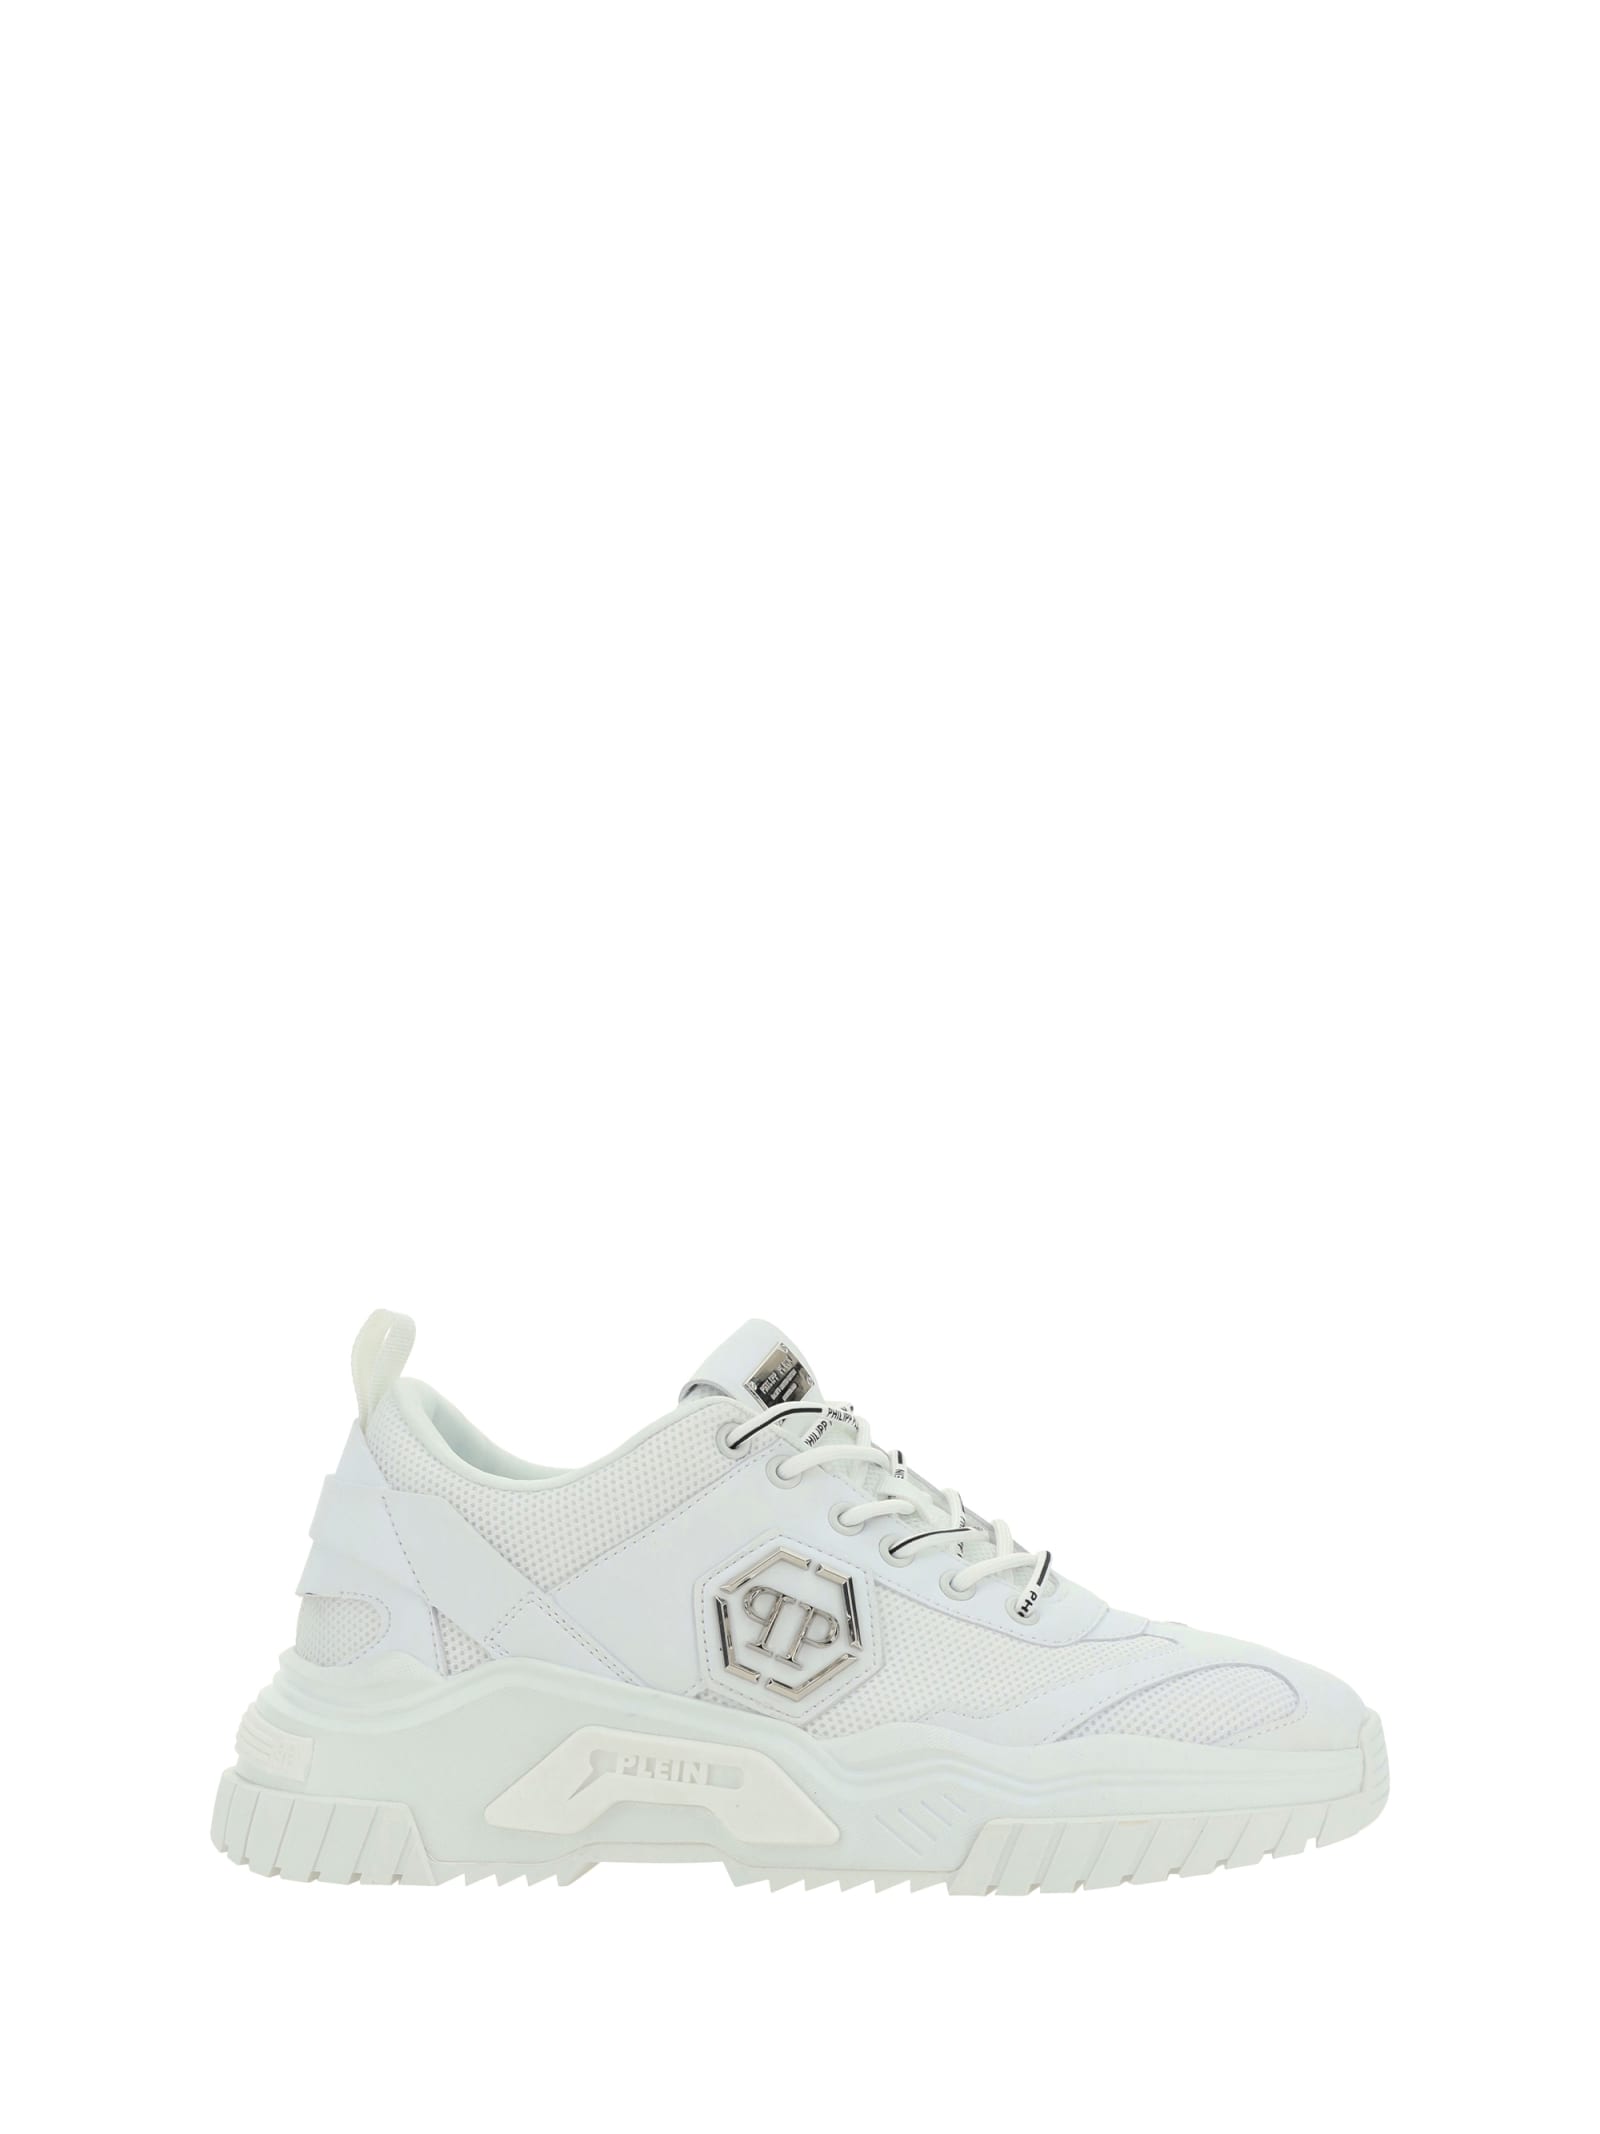 Philipp Plein Predator Sneakers In White / White